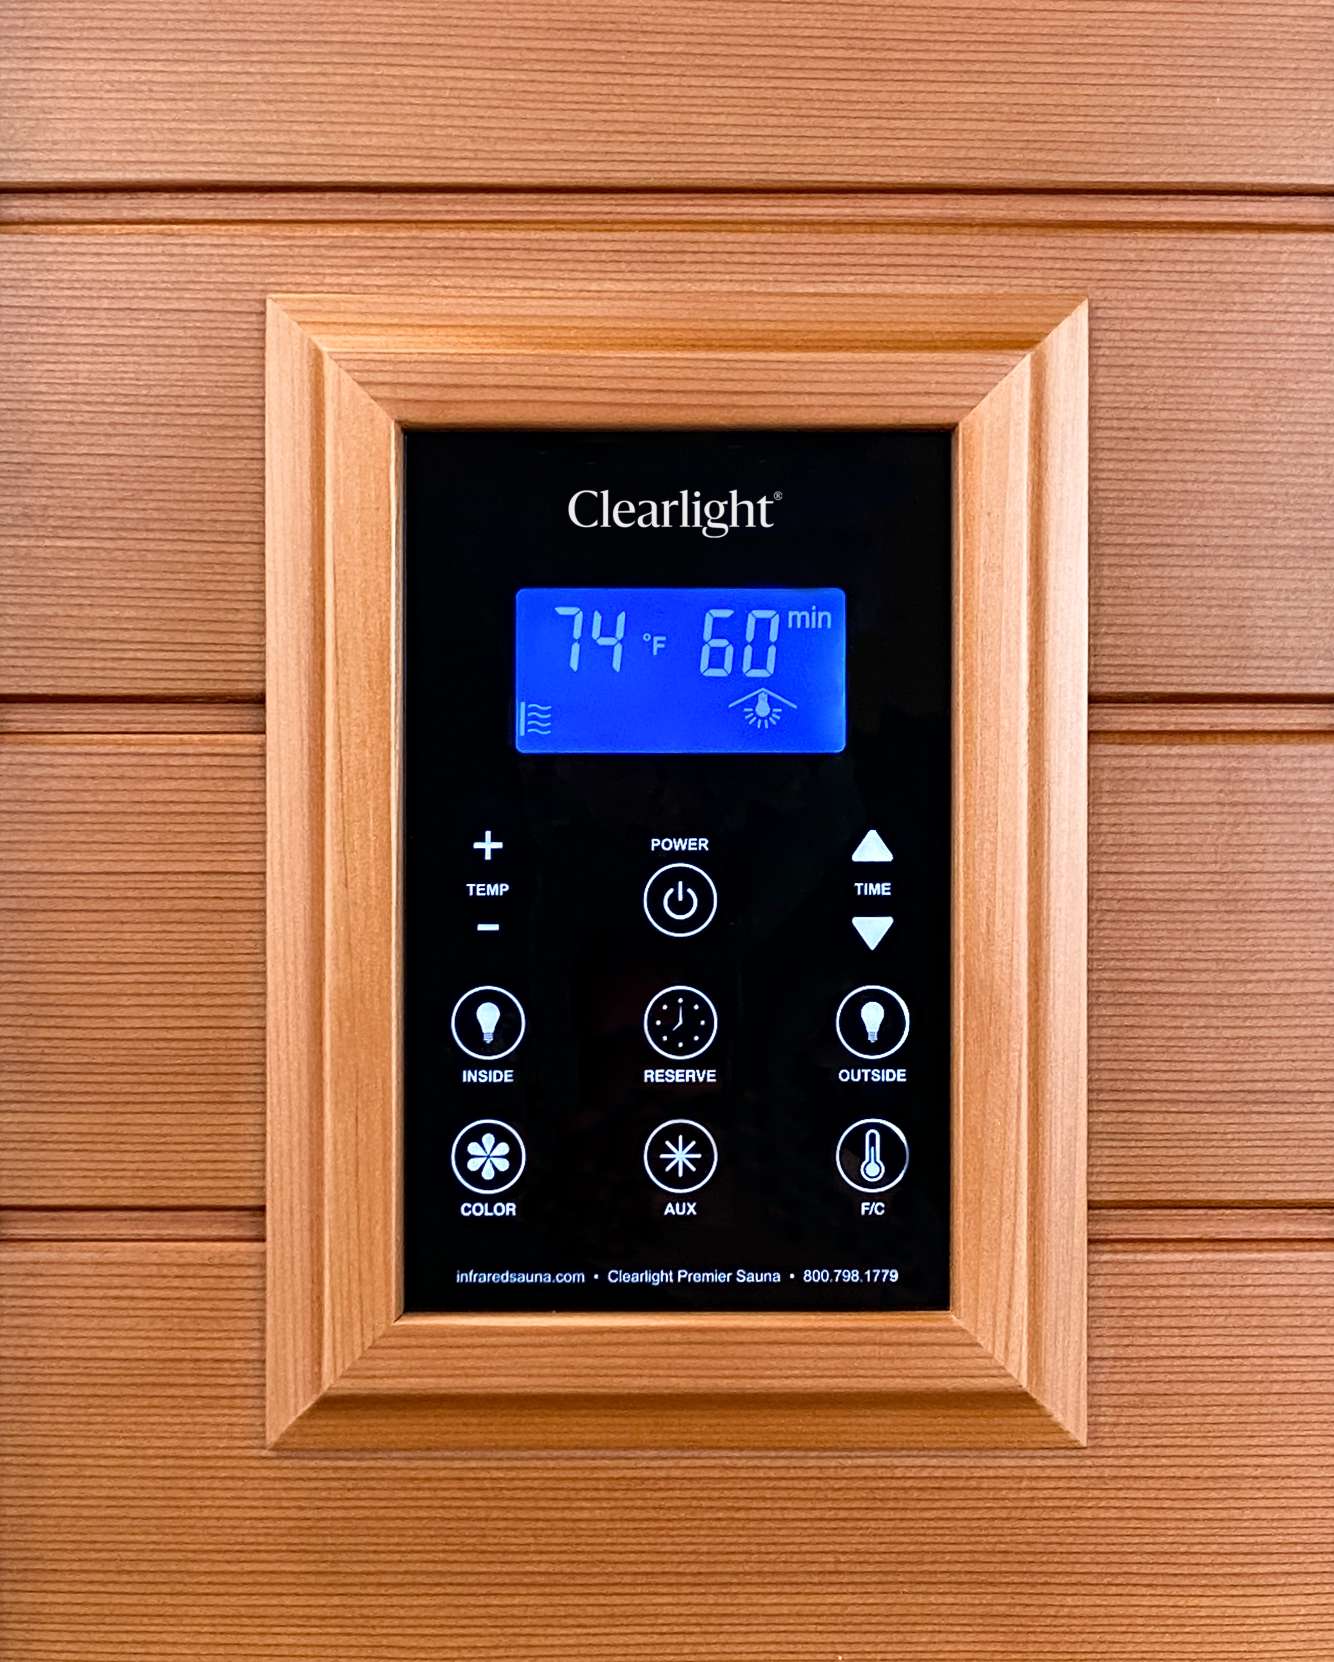 Clearlight Premier IS-2 Infrared Sauna digital keypad